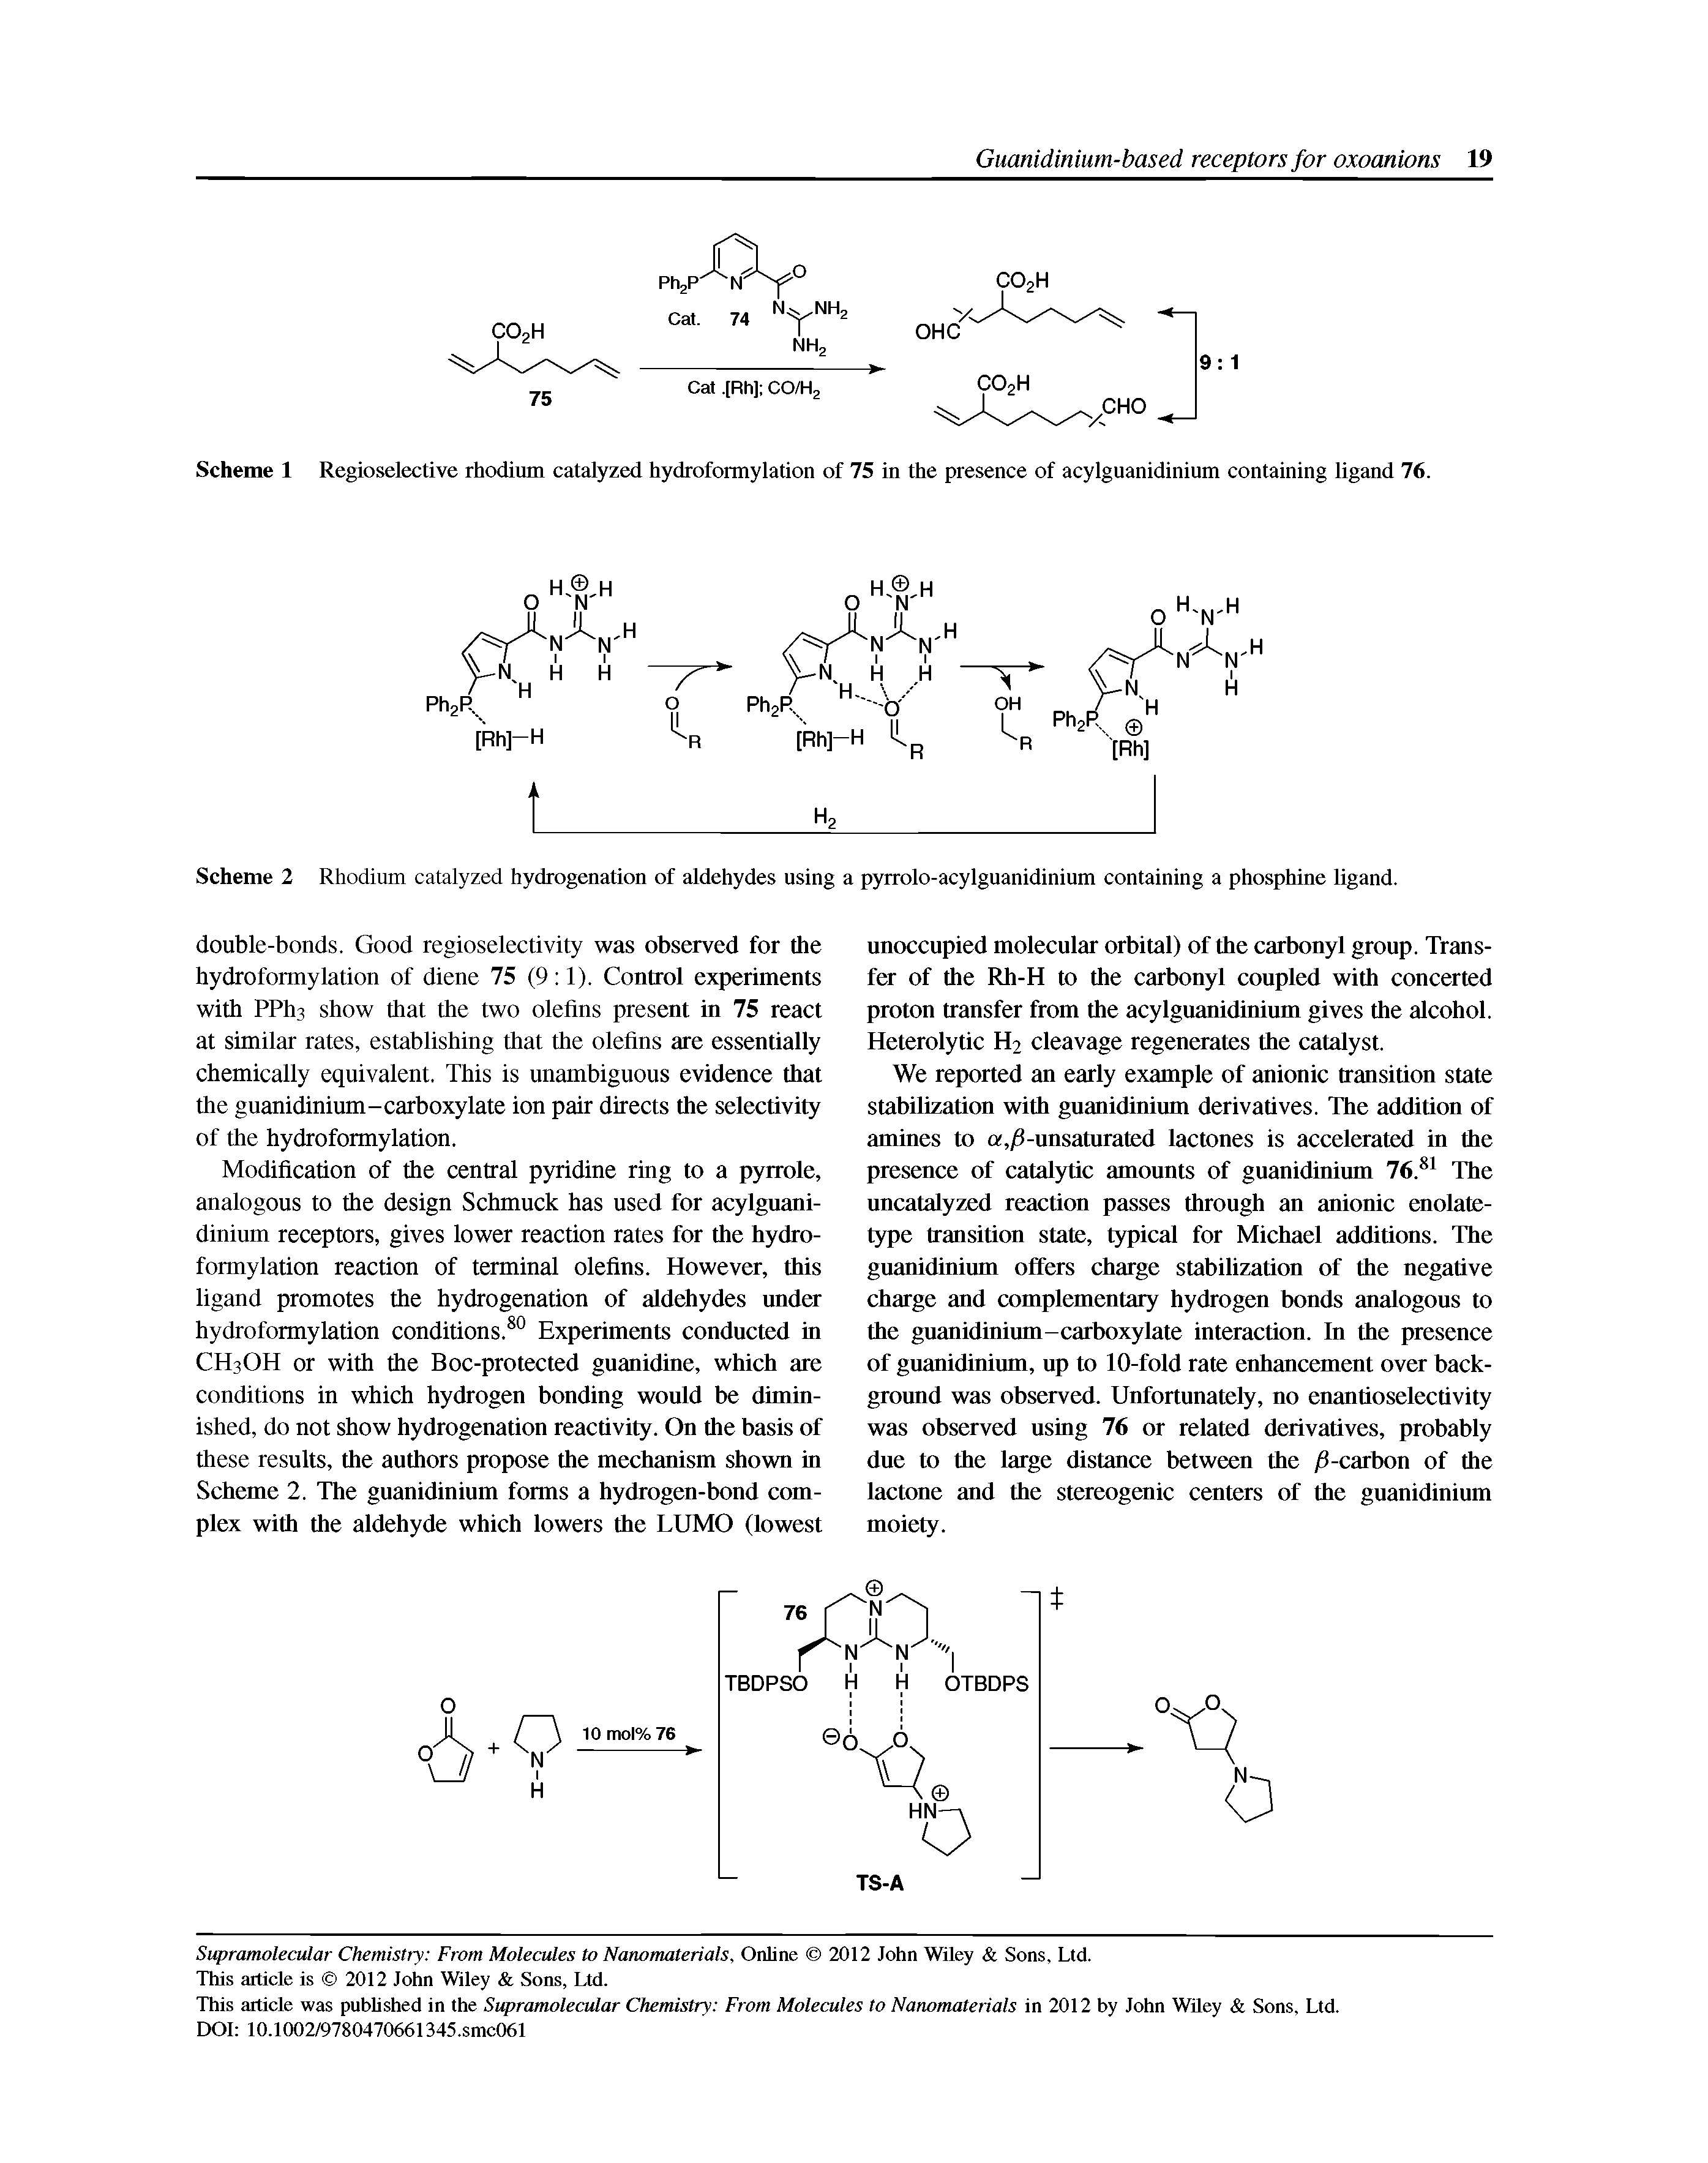 Scheme 2 Rhodium catalyzed hydrogenation of aldehydes using a pyrrolo-acylguanidinium containing a phosphine ligand.